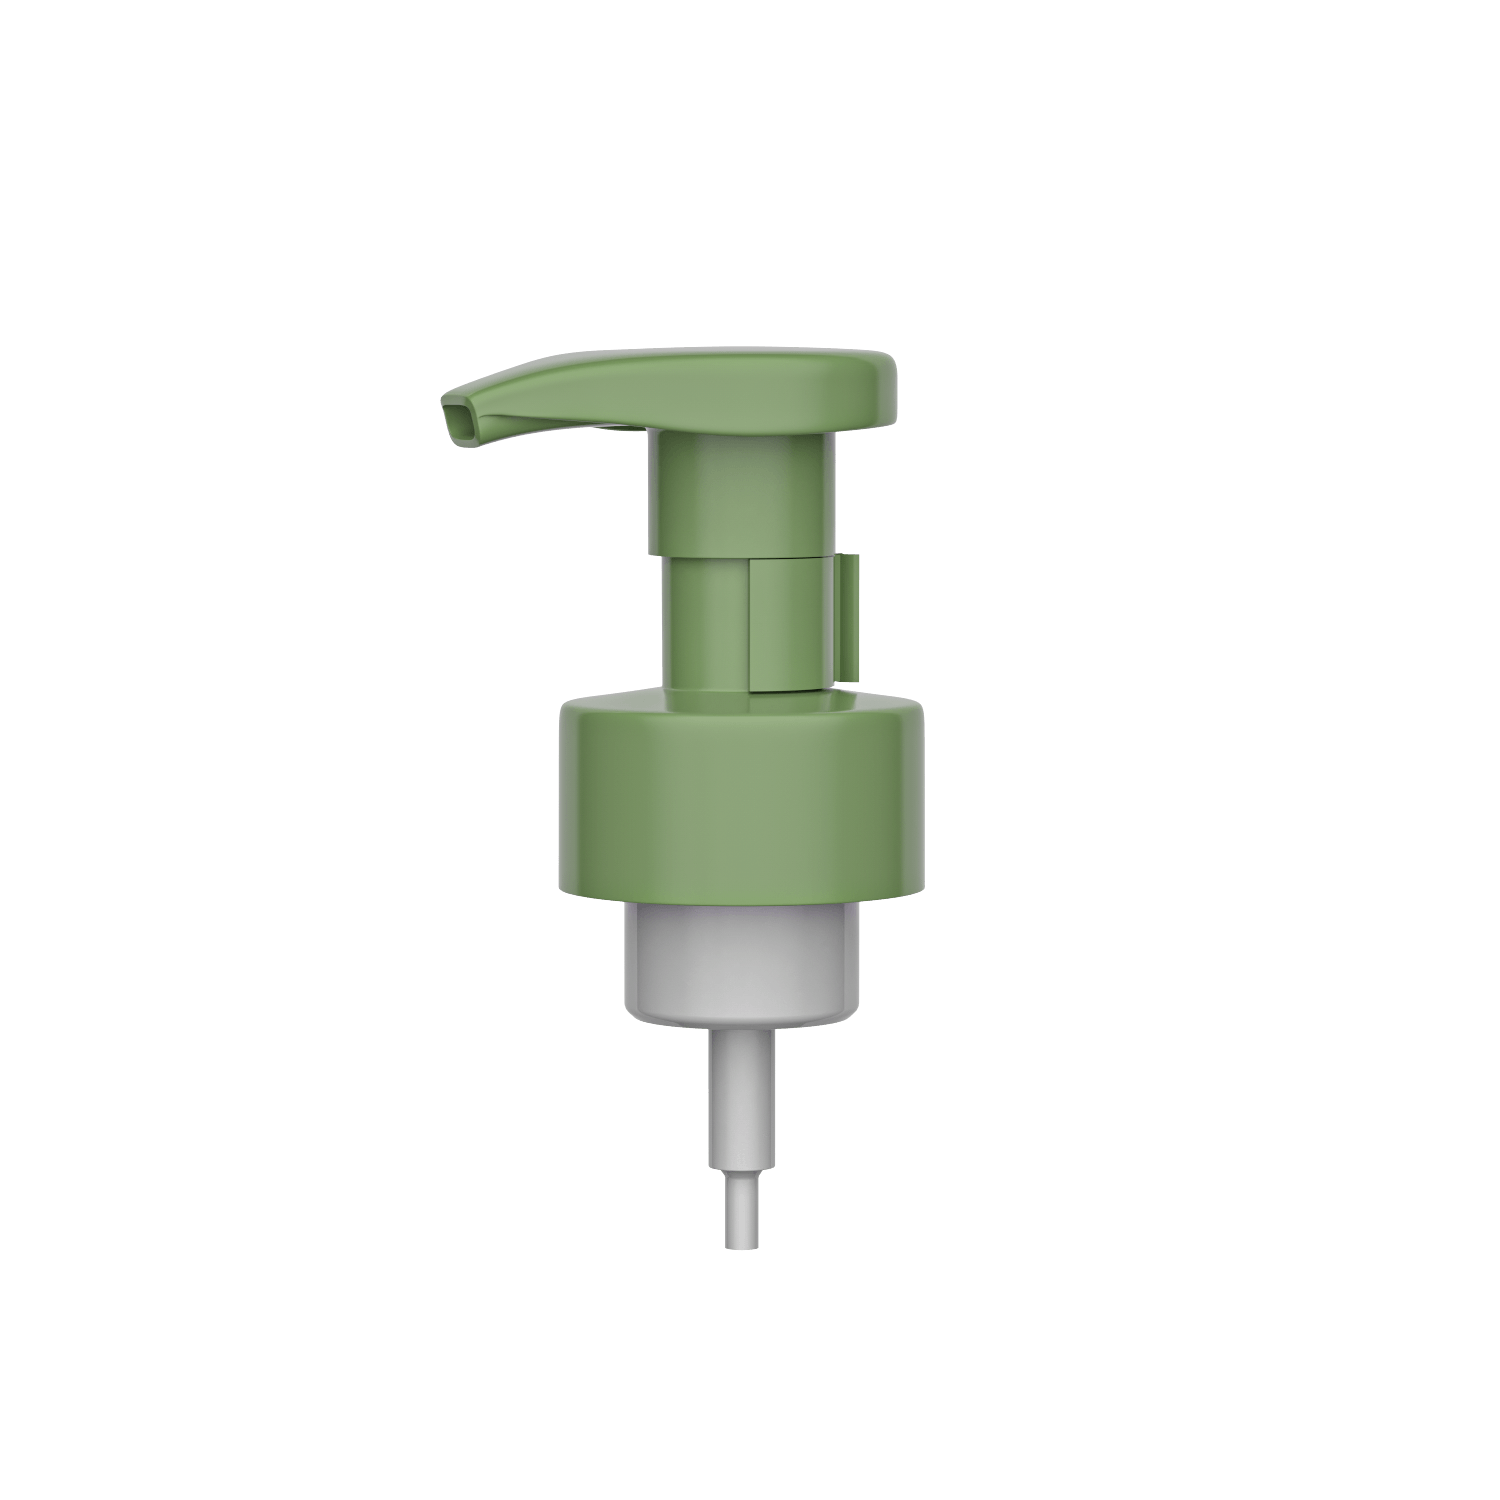 HD-502C 43/410 ハンドソープ シャンプー シャワー 洗浄 0.8ml/T 泡ポンプ